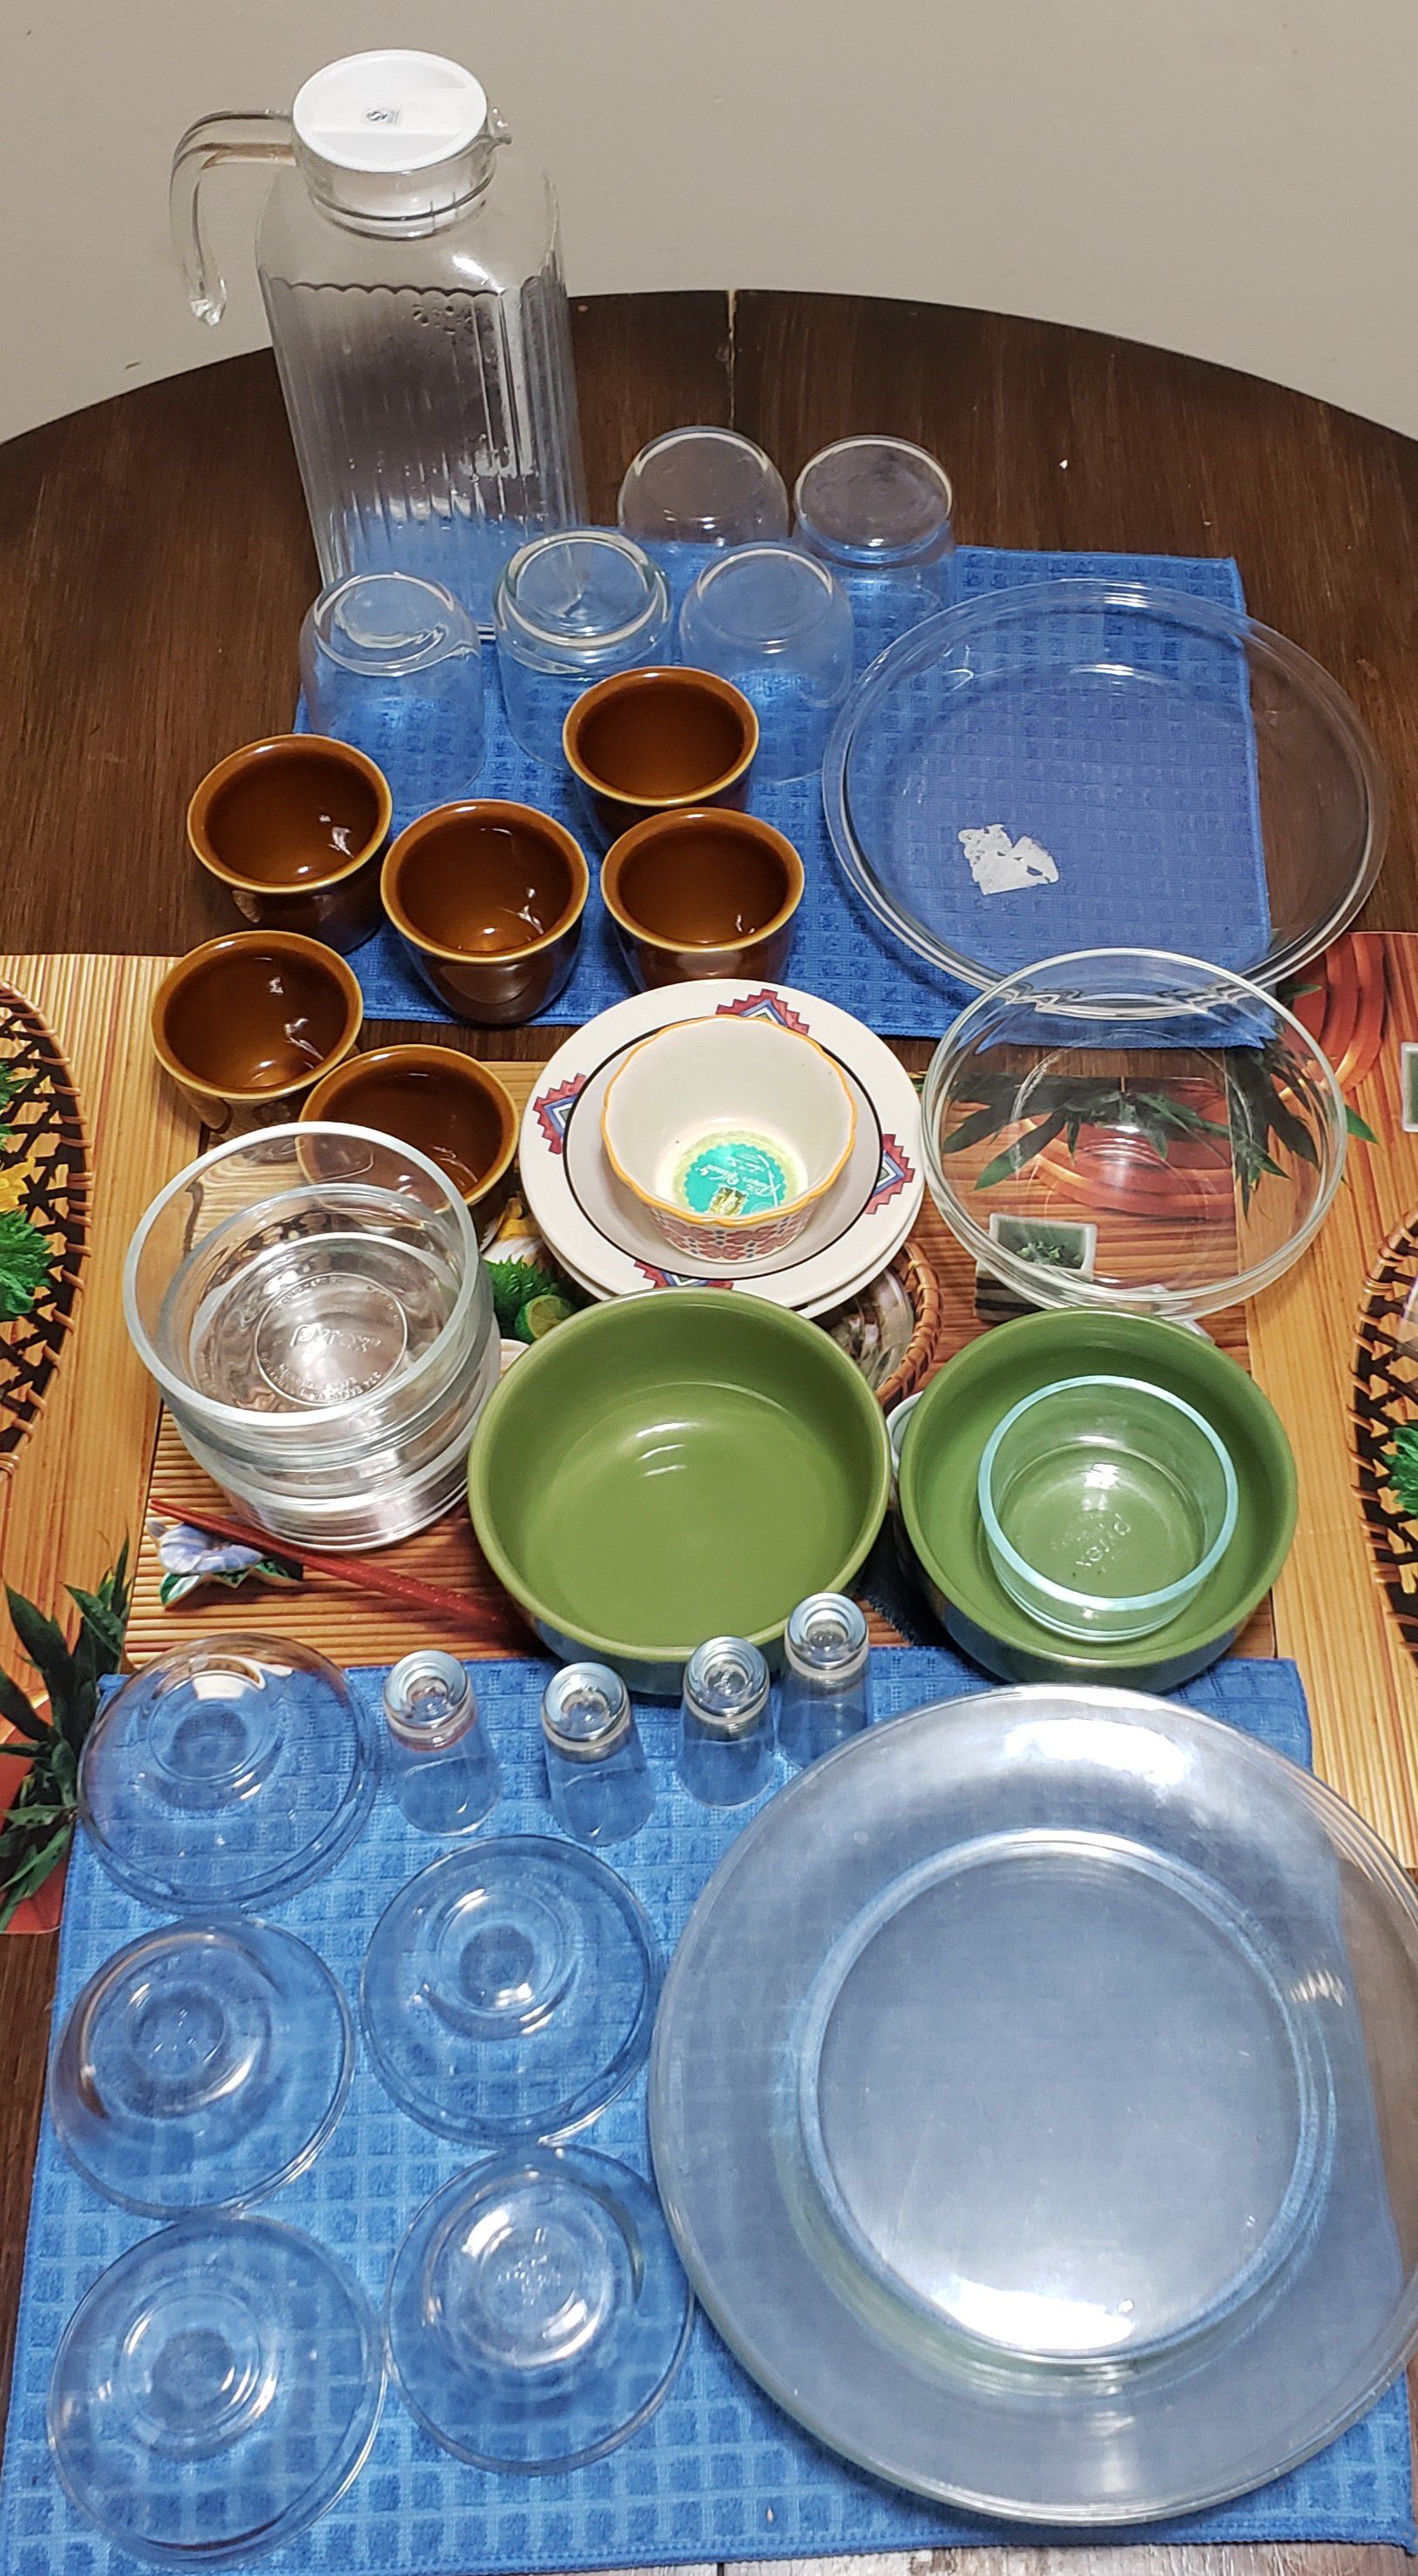 Pyex serving bowls, baking dish, glass Dinner set, ceramic serving bowls & tea cups, Glass Jug with immersion